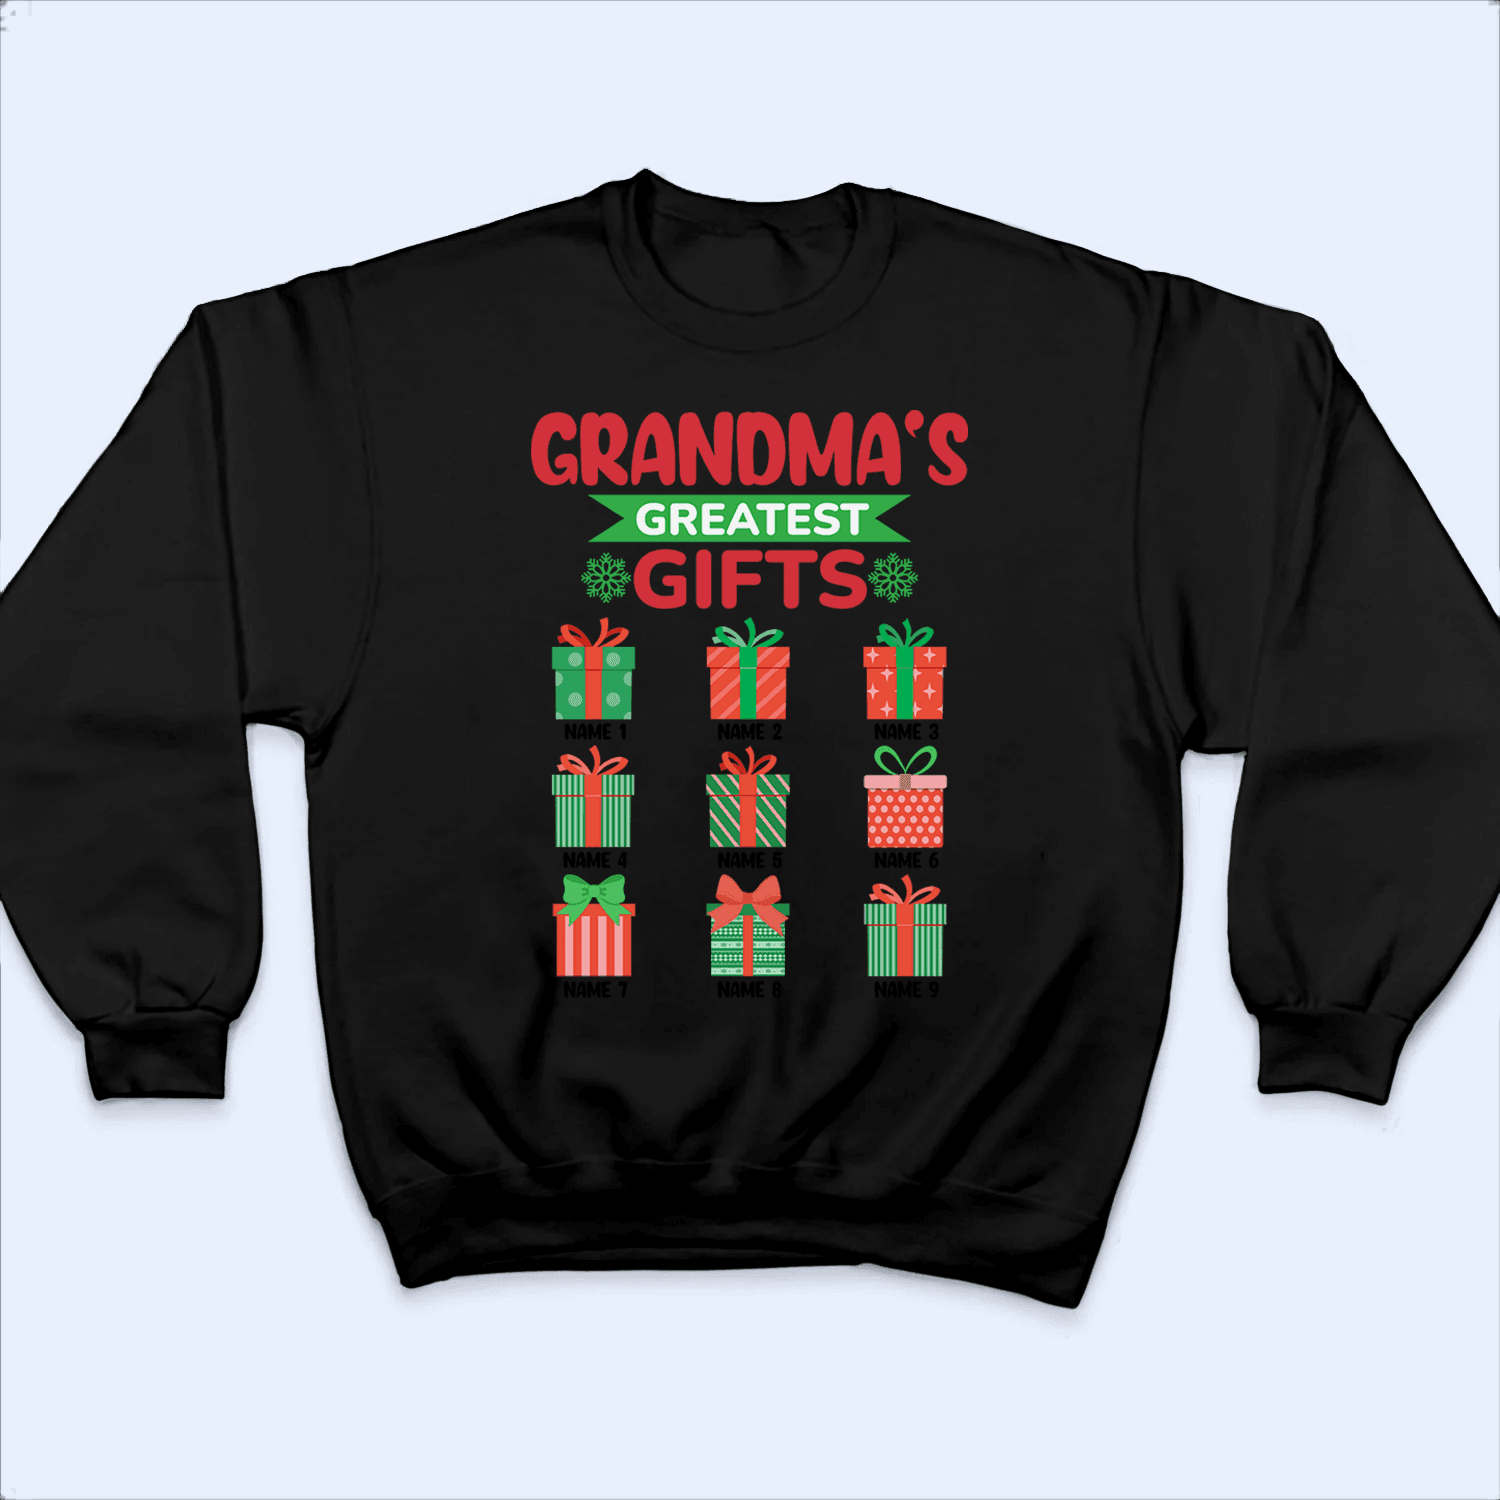 Grandma's Greatest Gifts - Personalized Custom T Shirt - Birthday, Loving, Funny Gift for Grandma/Nana/Mimi, Mom, Wife, Grandparent - Suzitee Store